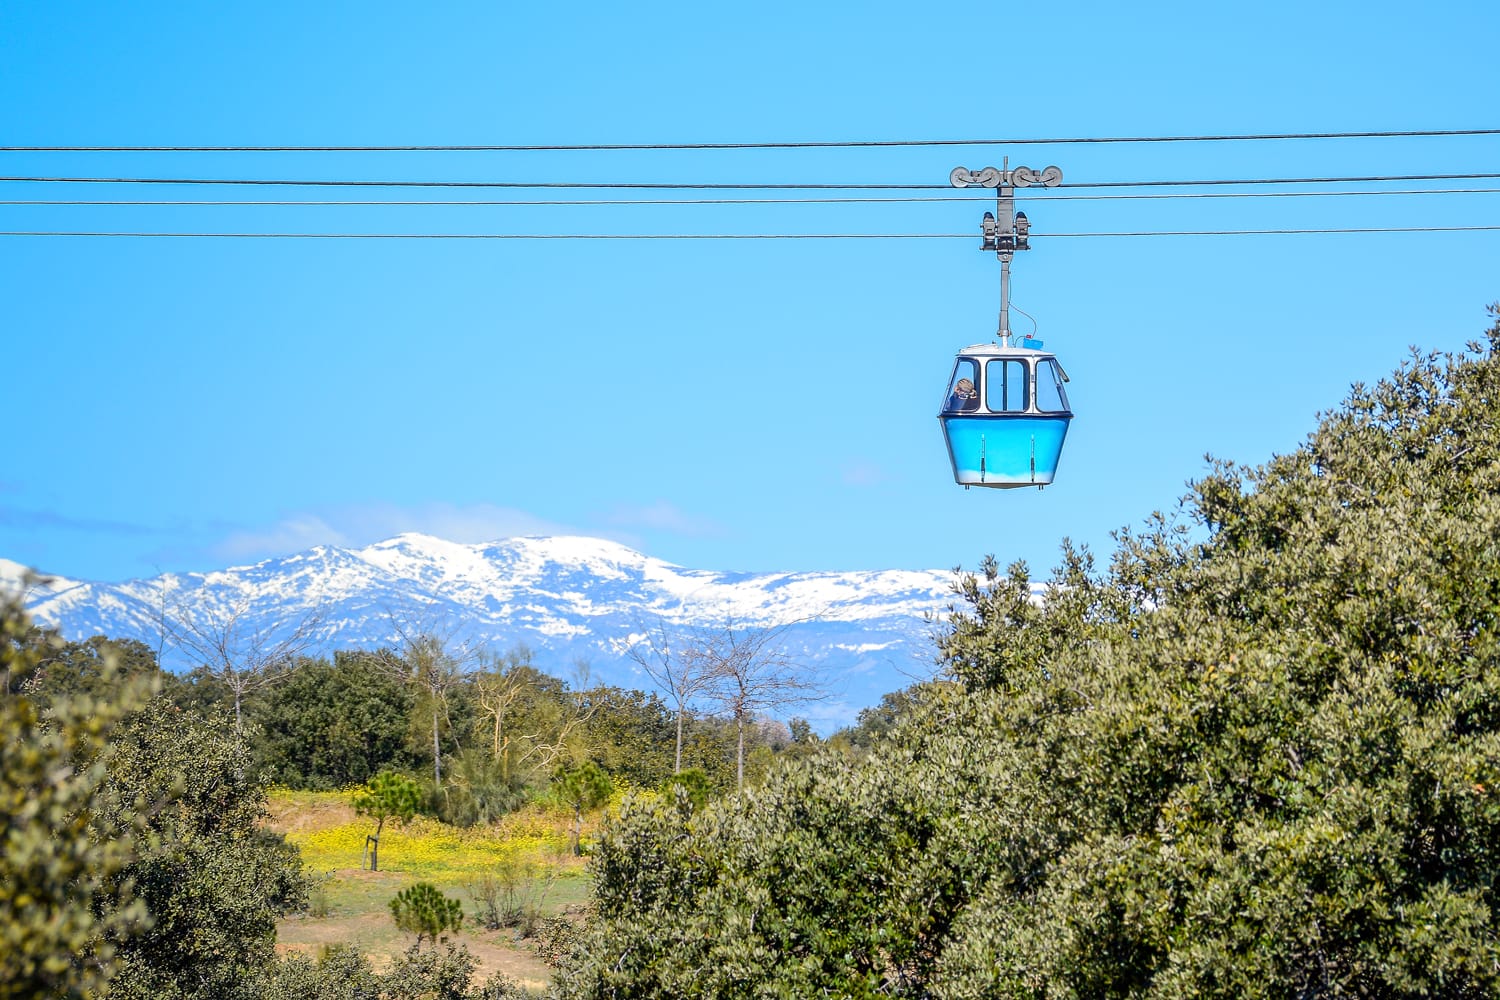 Madrid's cable car (Teleférico de Madrid in Spanish). a gondola lift that links the Parque del Oeste with the Casa de Campo.